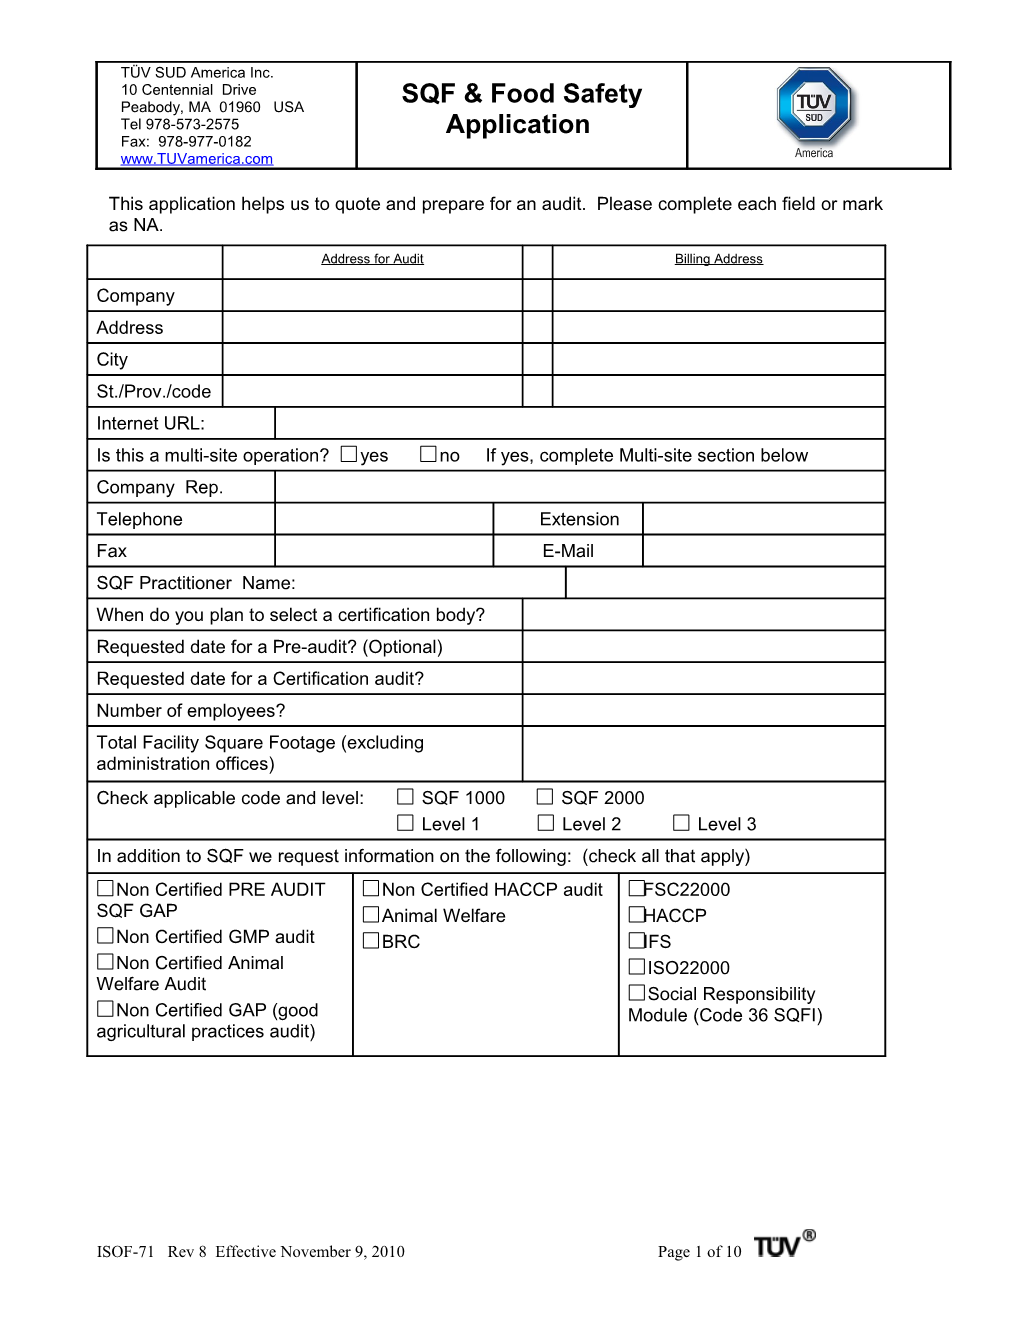 Questionnaire to Prepare for a TÜV Management Service Certification Audit